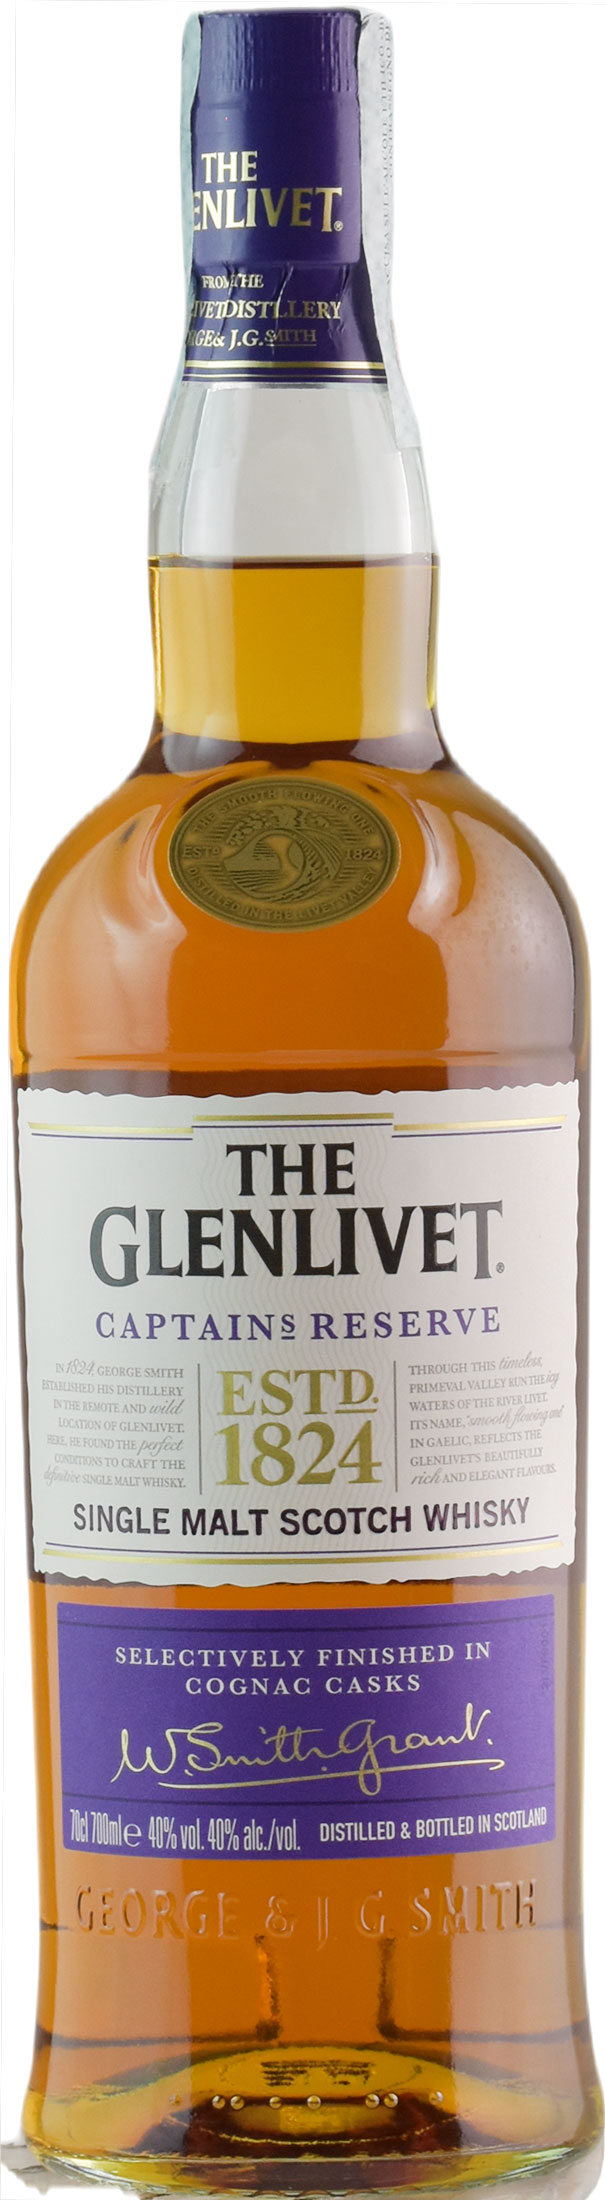 The Glenlivet Single Malt Scotch Whisky Captain Reserve